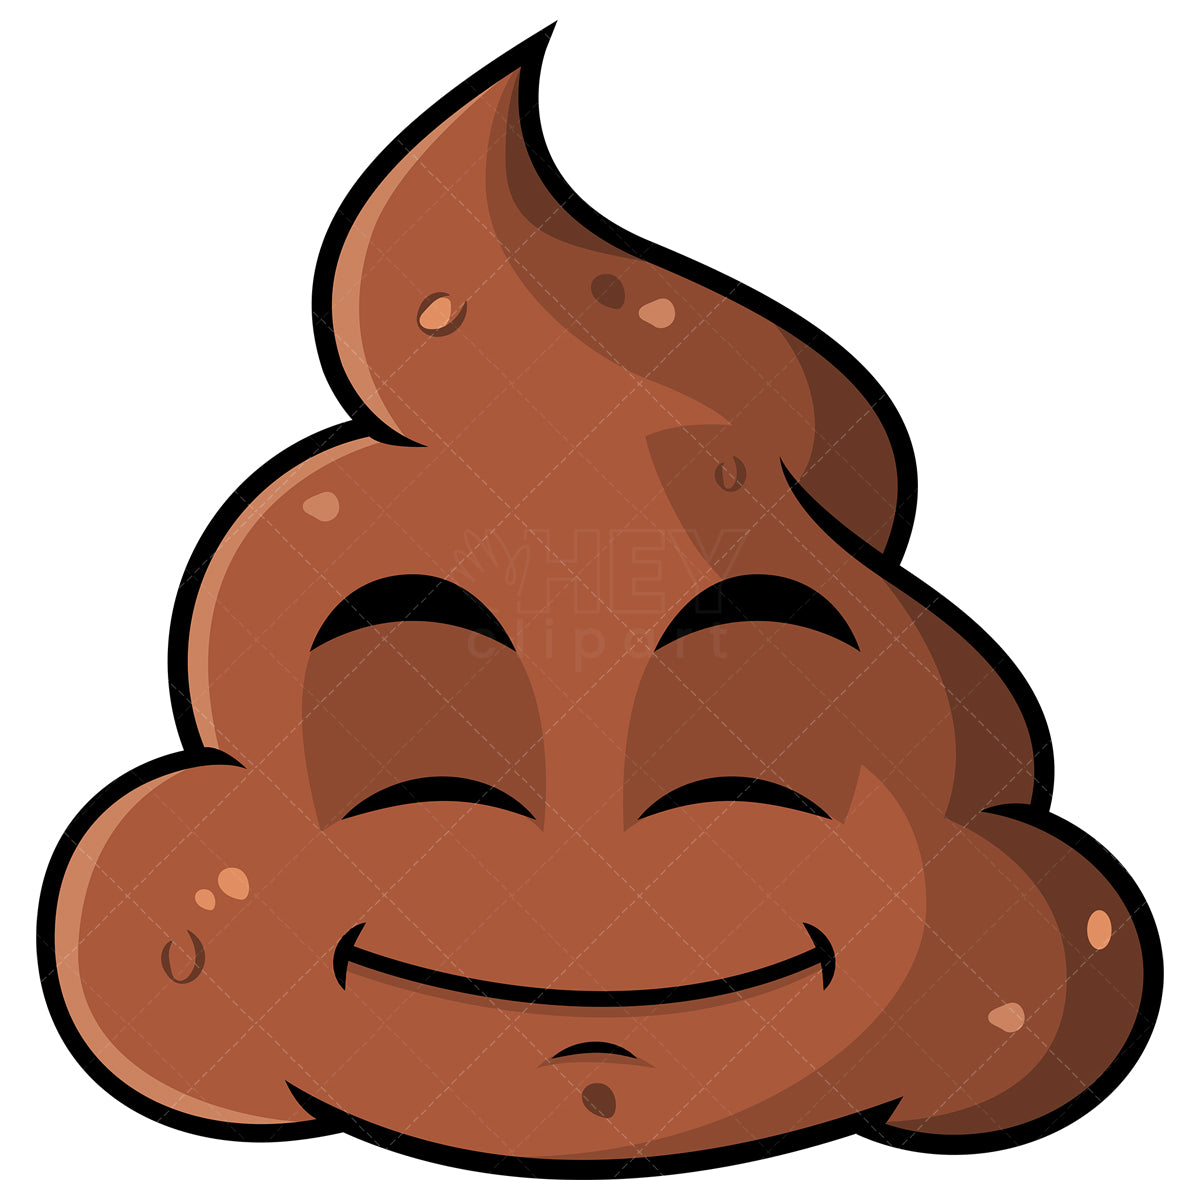 Royalty-free stock vector illustration of a happy looking poop emoji.